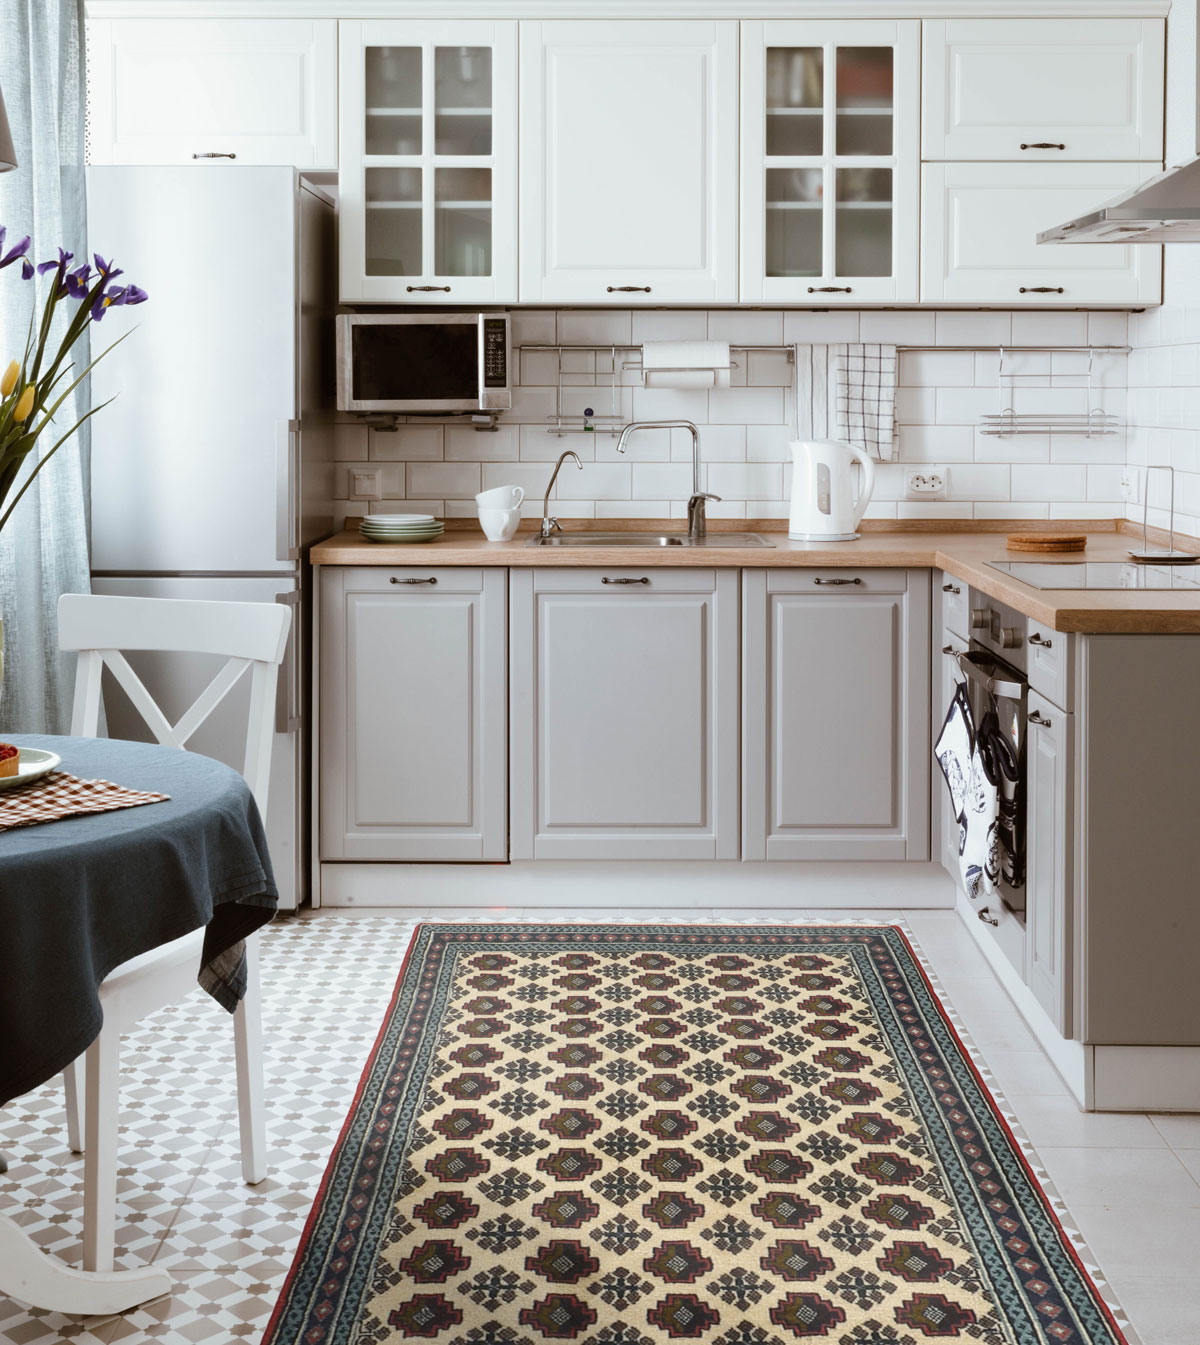 Why Choose A Kitchen Runner Carpet